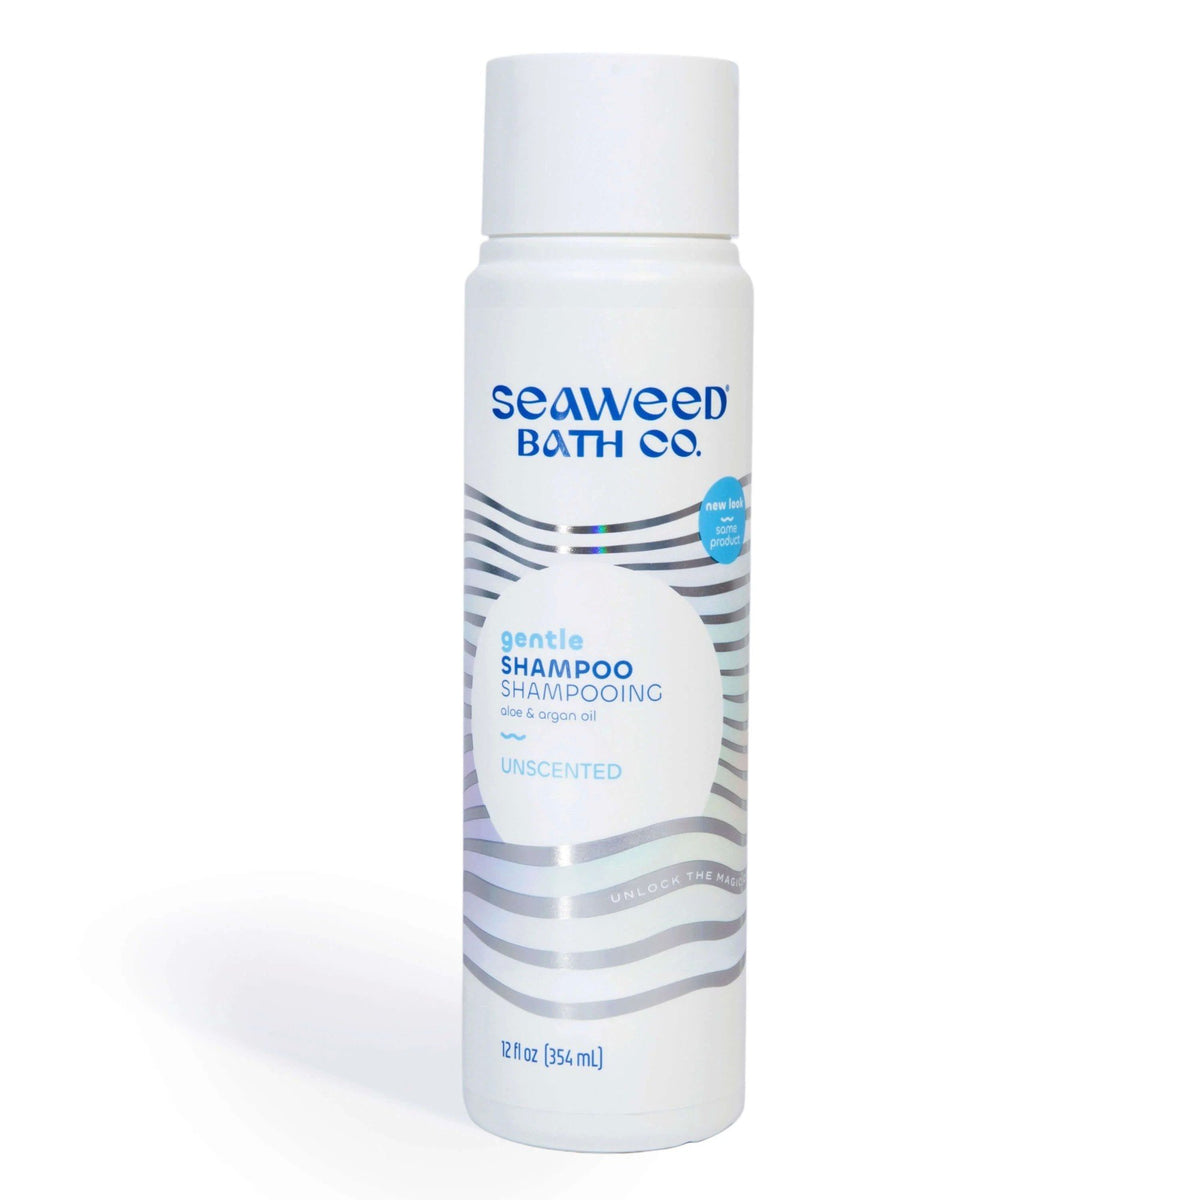 The Seaweed Bath Co. Gentle Shampoo Unscented 12 oz Liquid